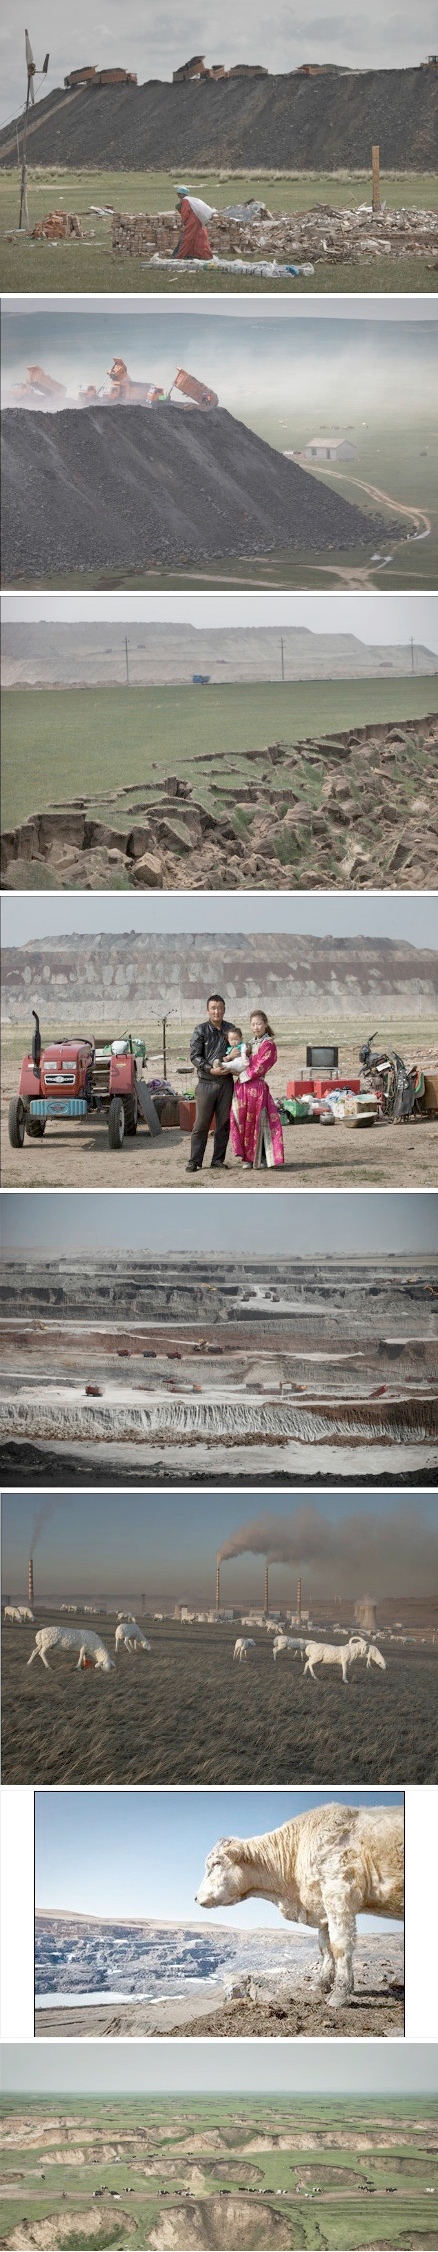 Hulunbuir Grassland destroyed by coal mining activities. Baoyi's Weibo Photos.